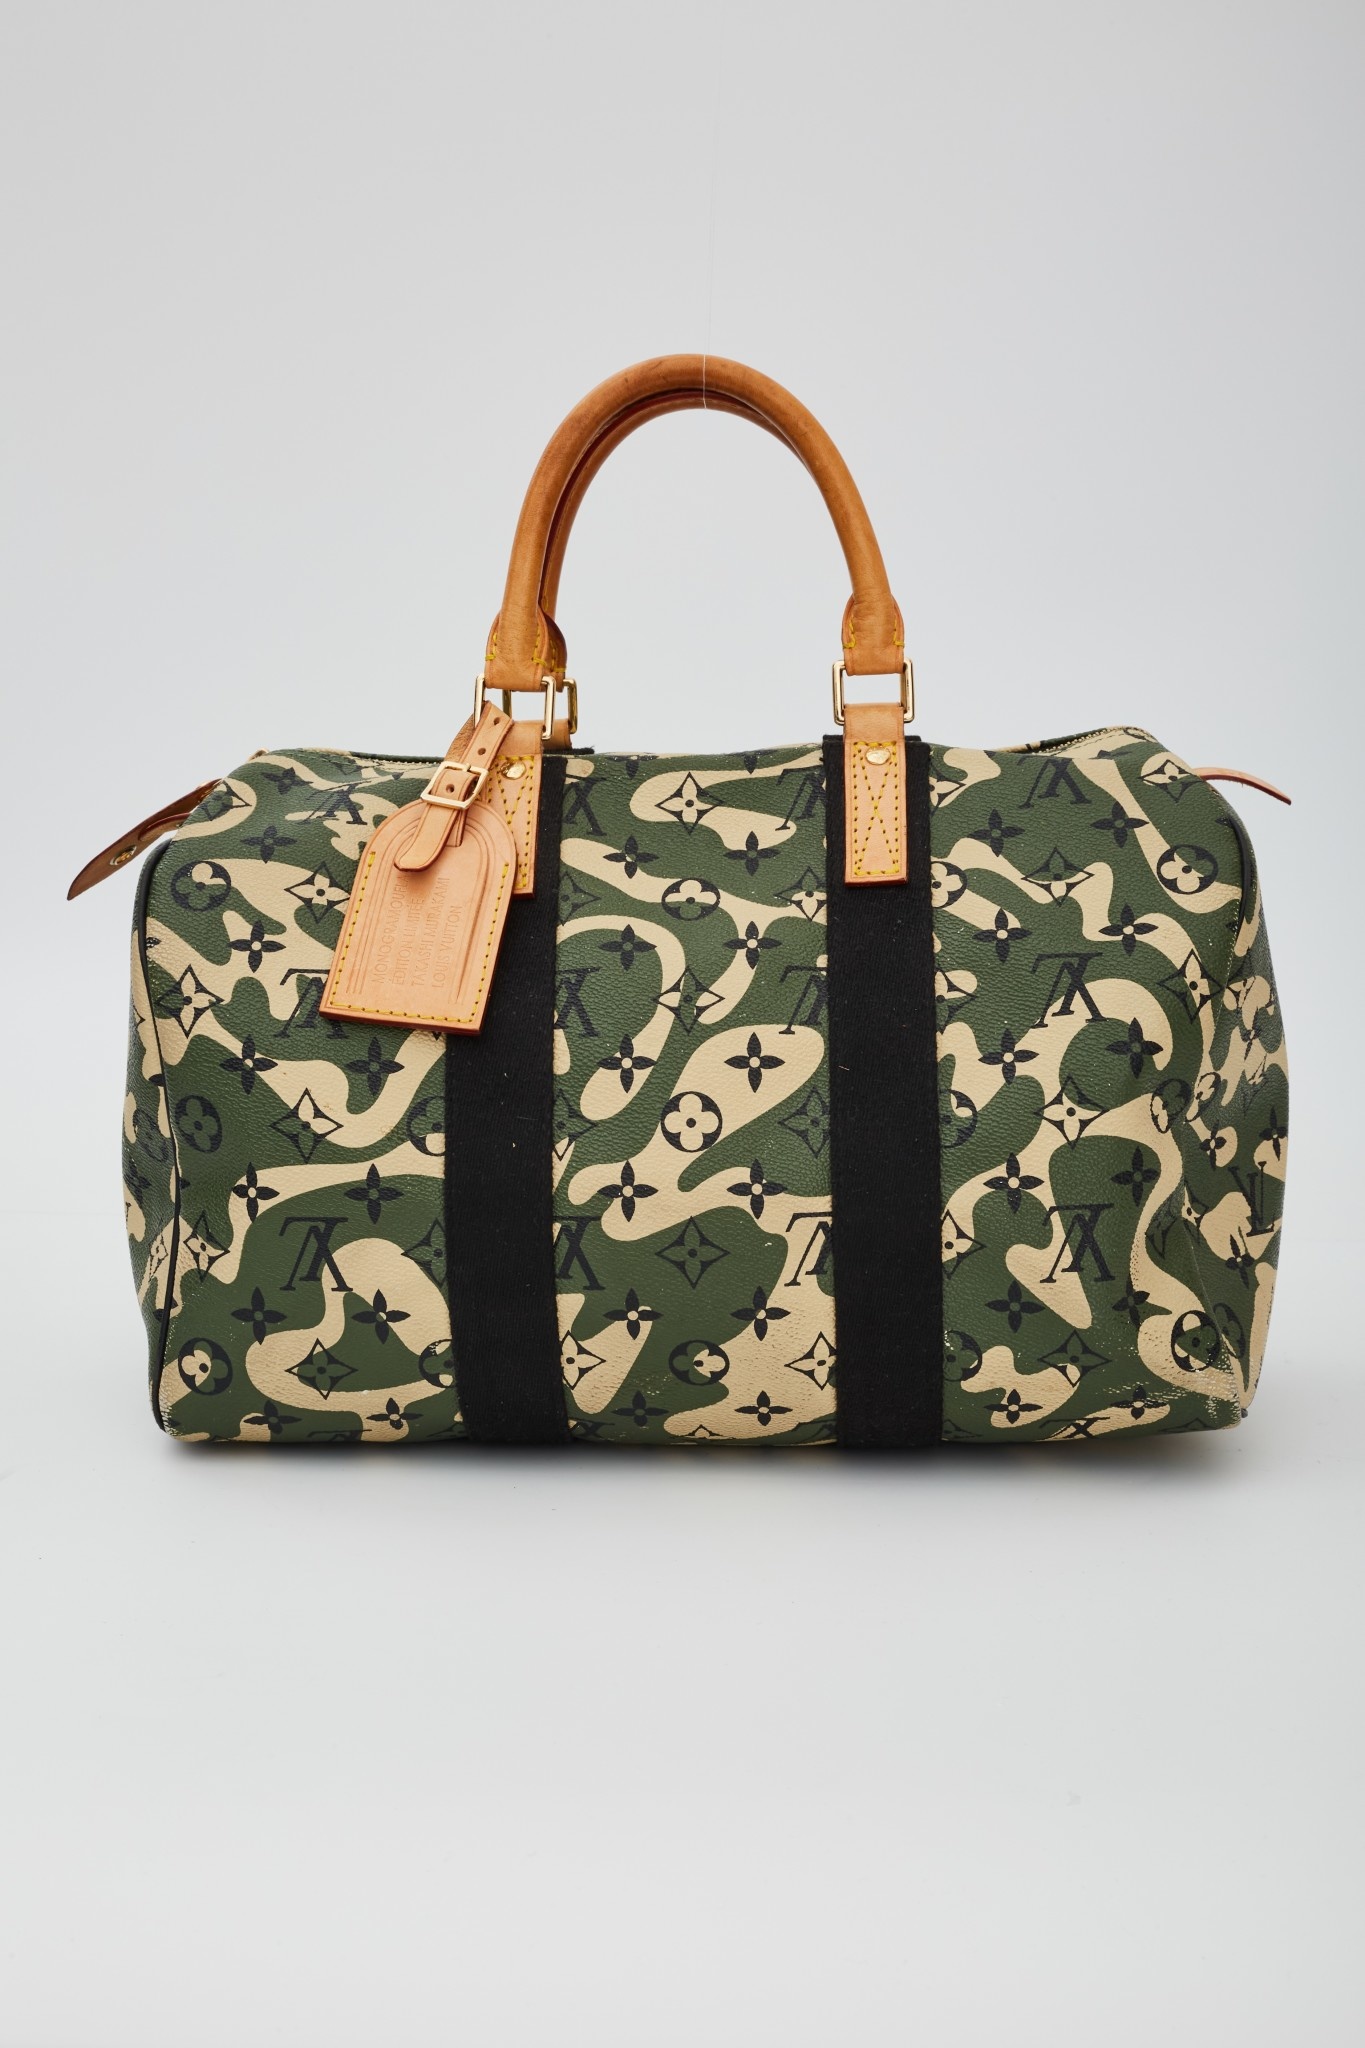 Louis Vuitton Monogramouflage Speedy 35 Limited Edition Takashi Murakami, Handbags and Accessories Online, Ecommerce Retail